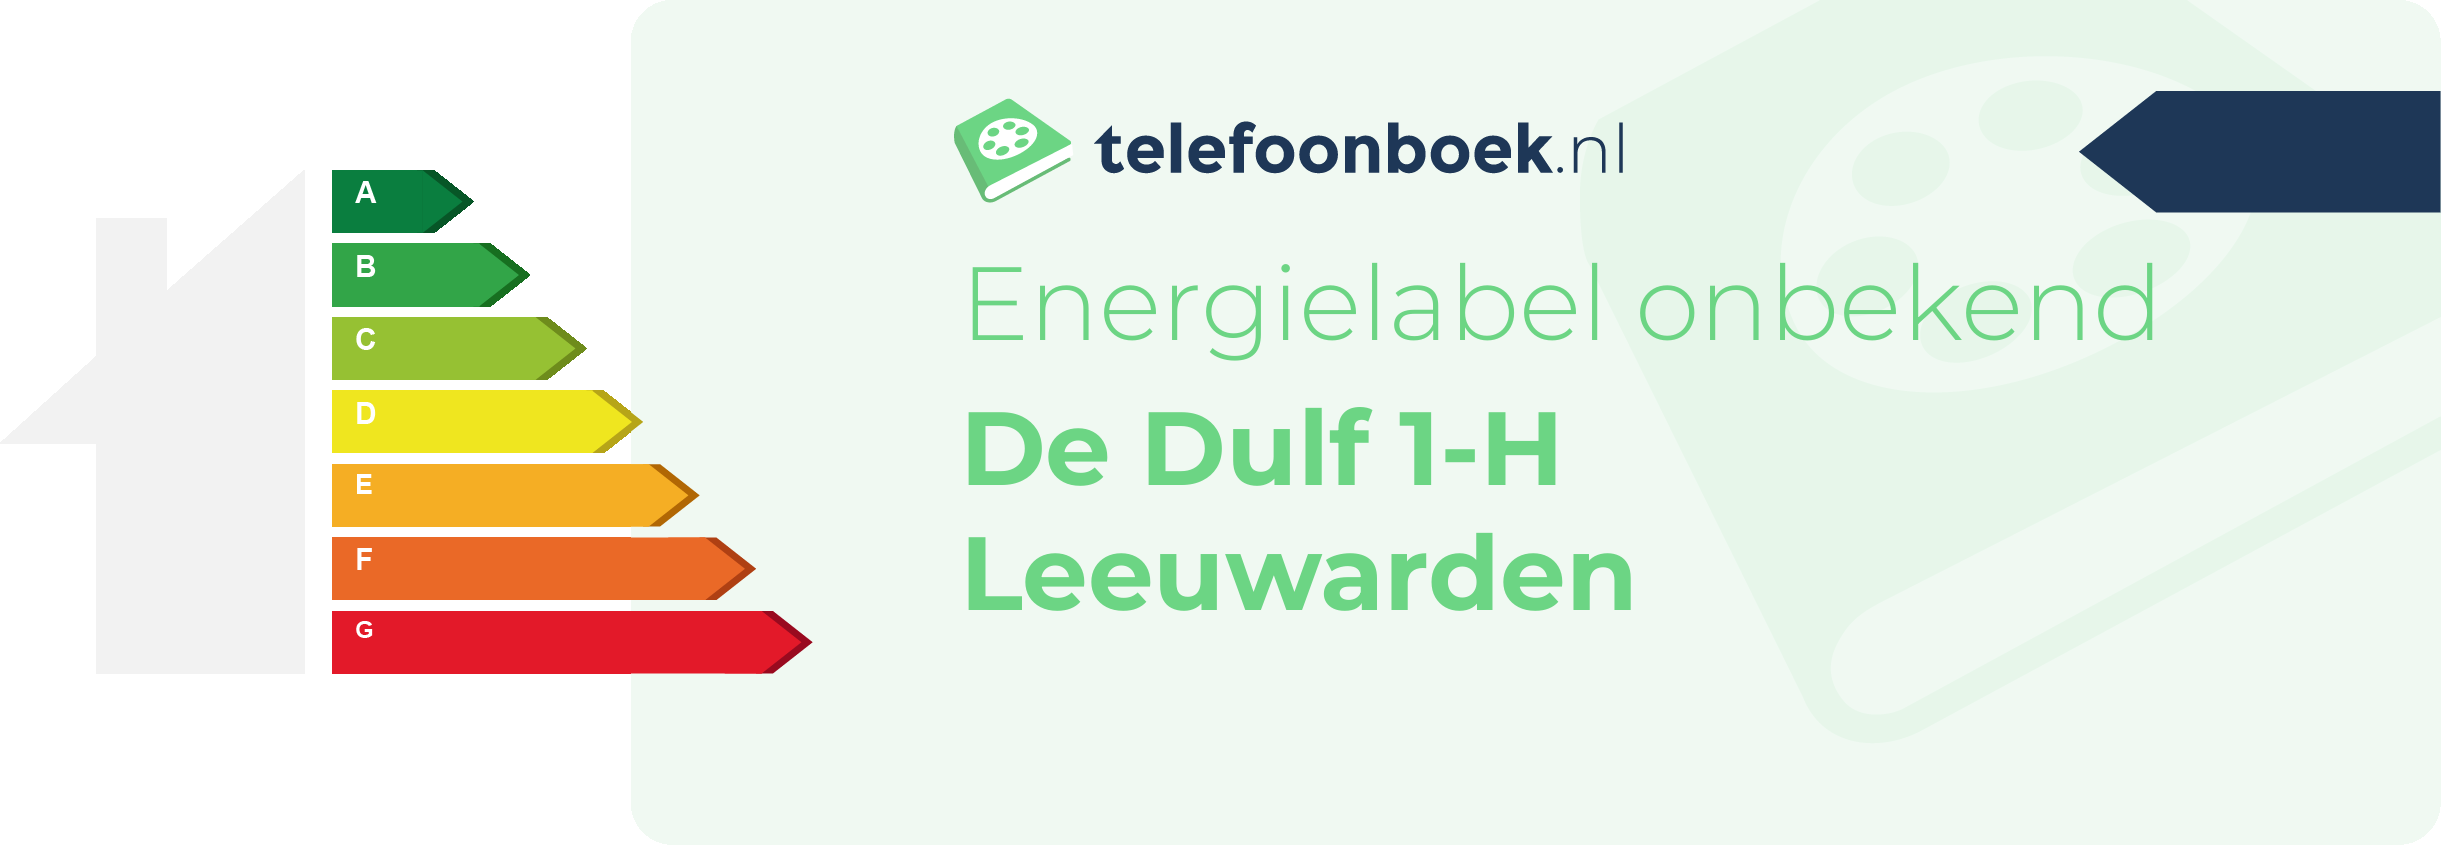 Energielabel De Dulf 1-H Leeuwarden